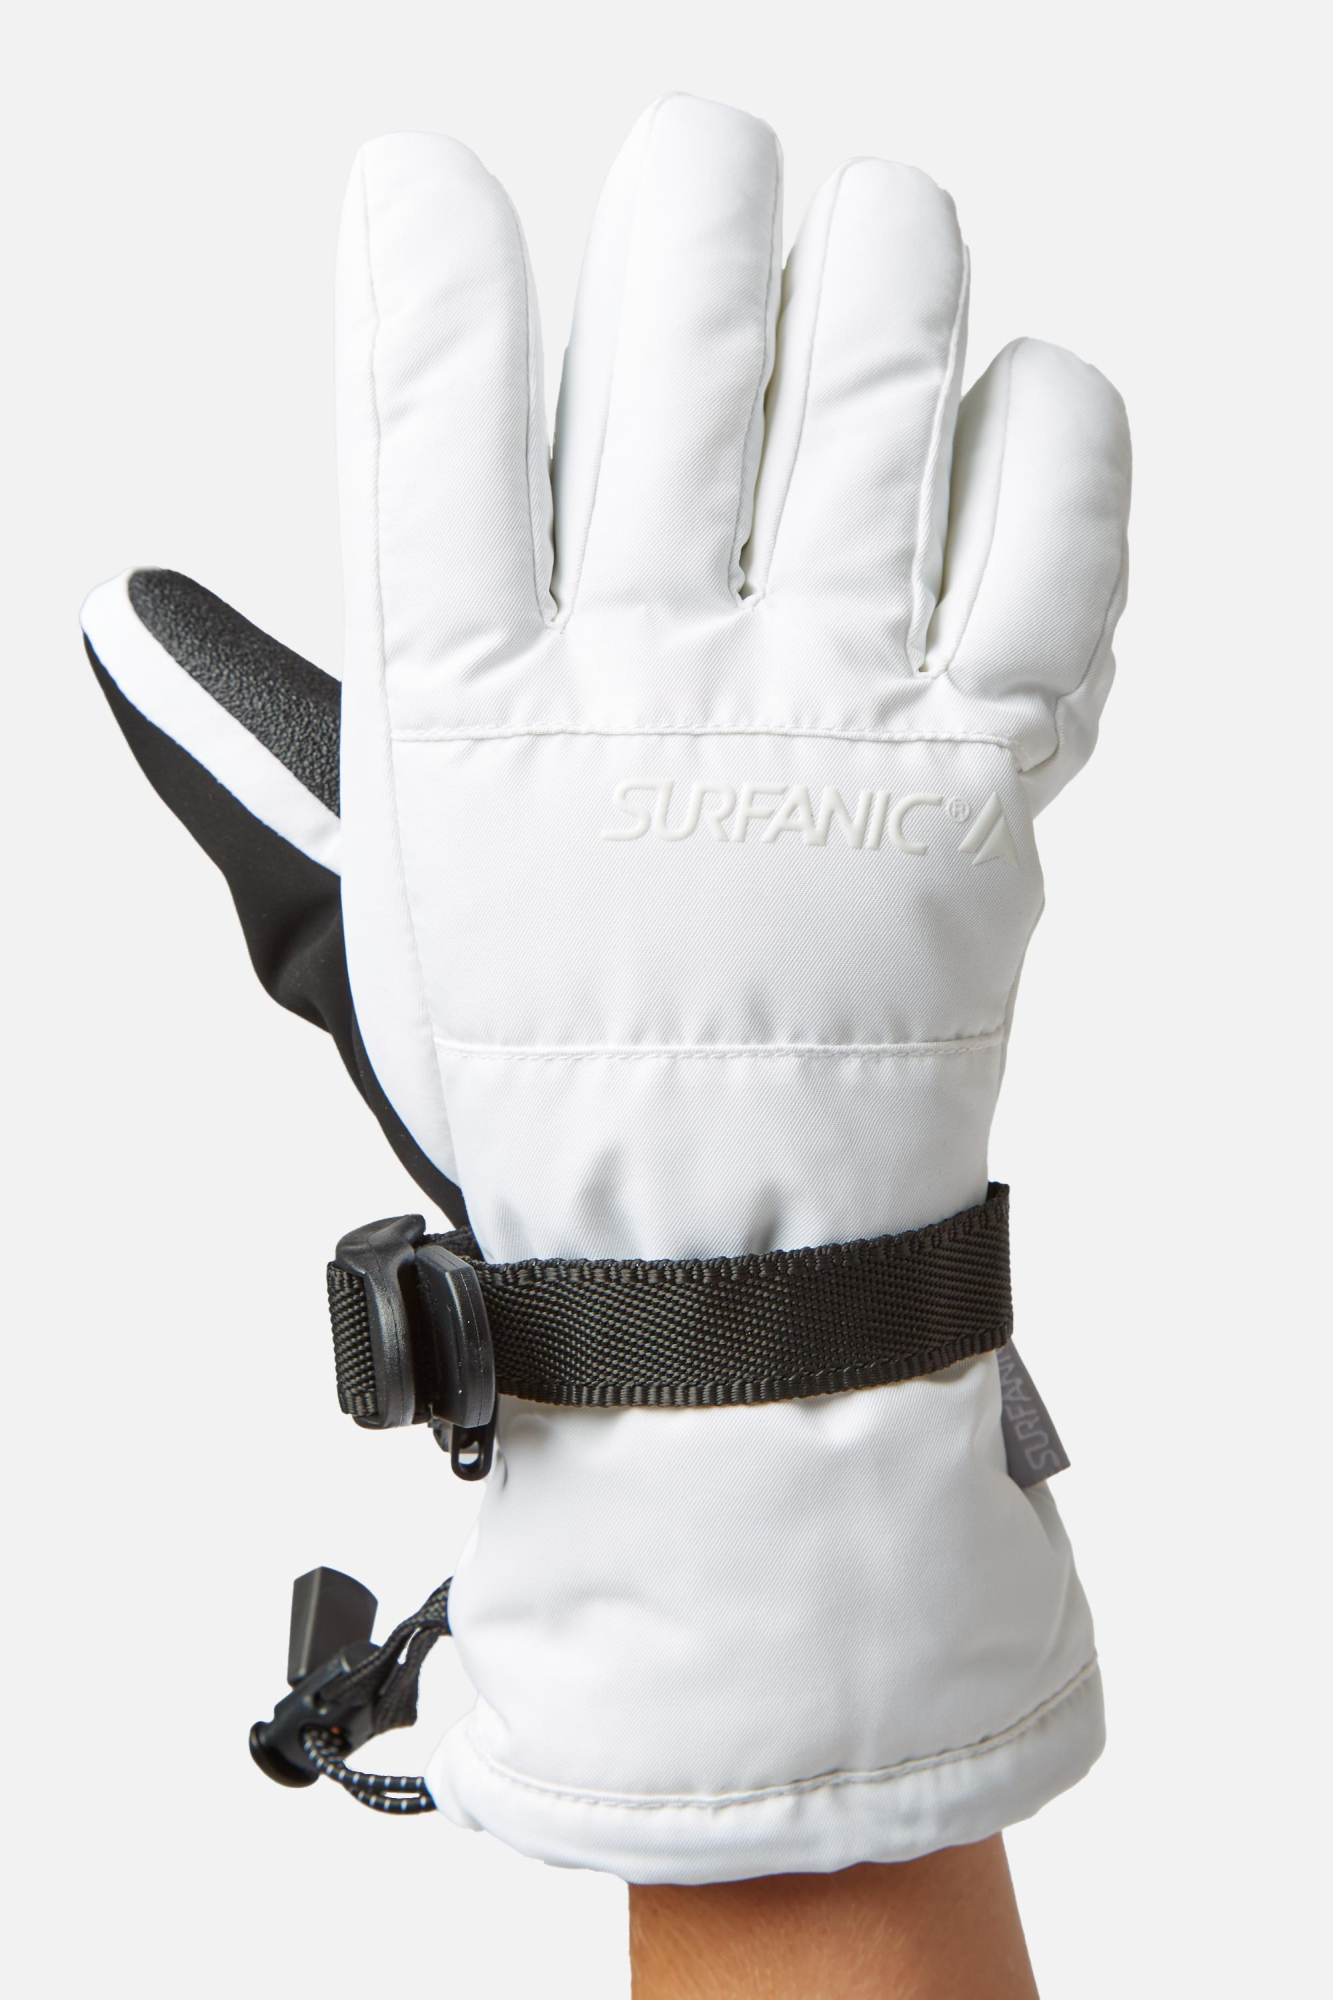 Surfanic Womens Alaska Glove White - Size: Medium